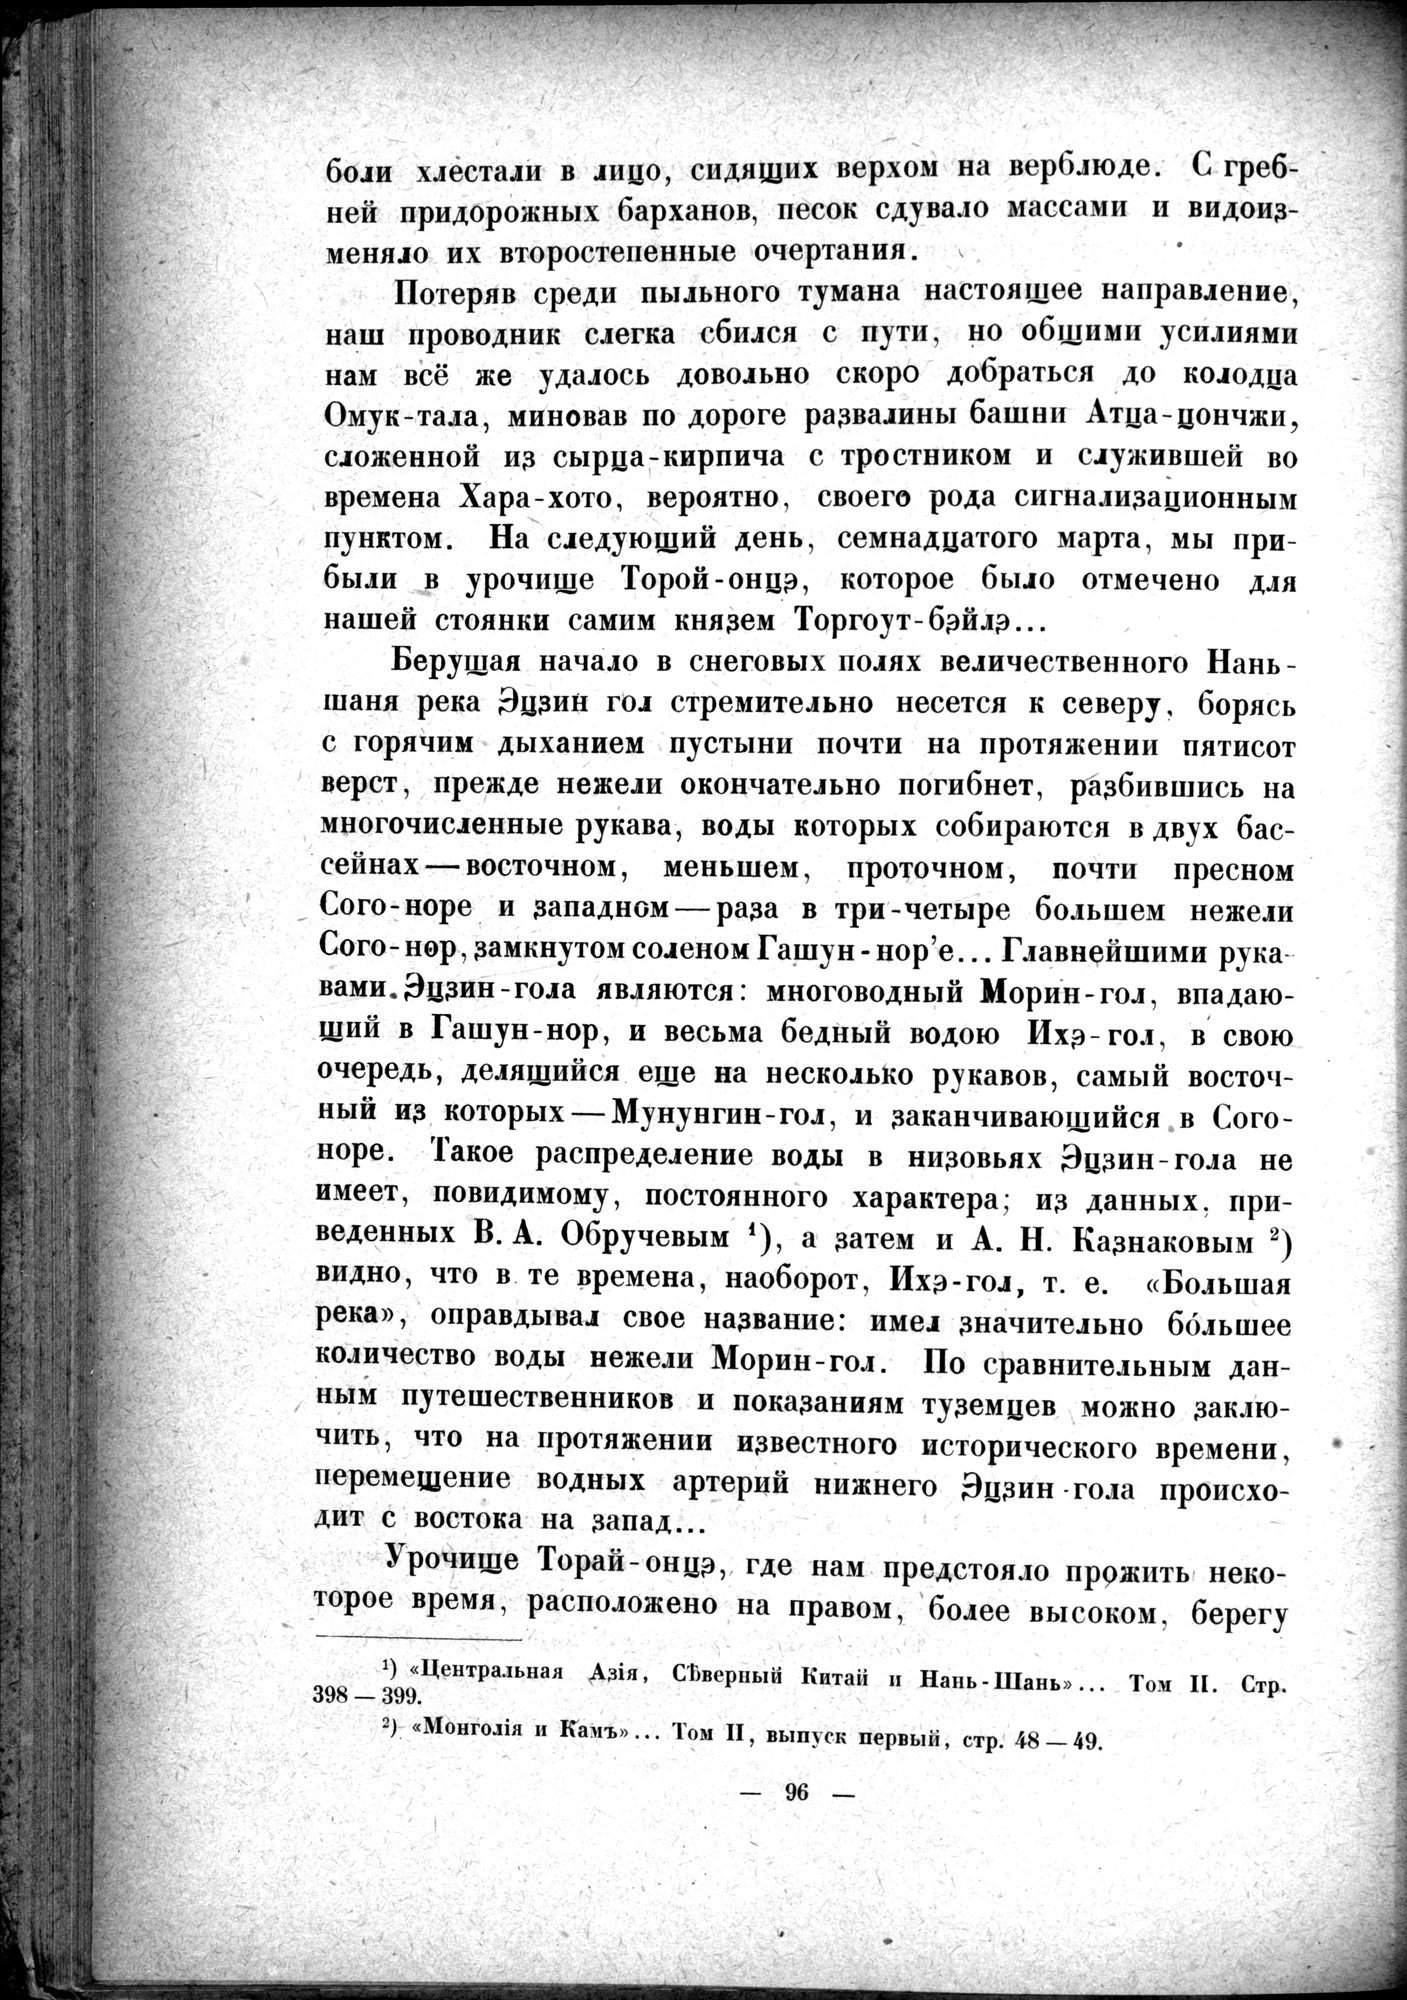 Mongoliya i Amdo i mertby gorod Khara-Khoto : vol.1 / Page 122 (Grayscale High Resolution Image)